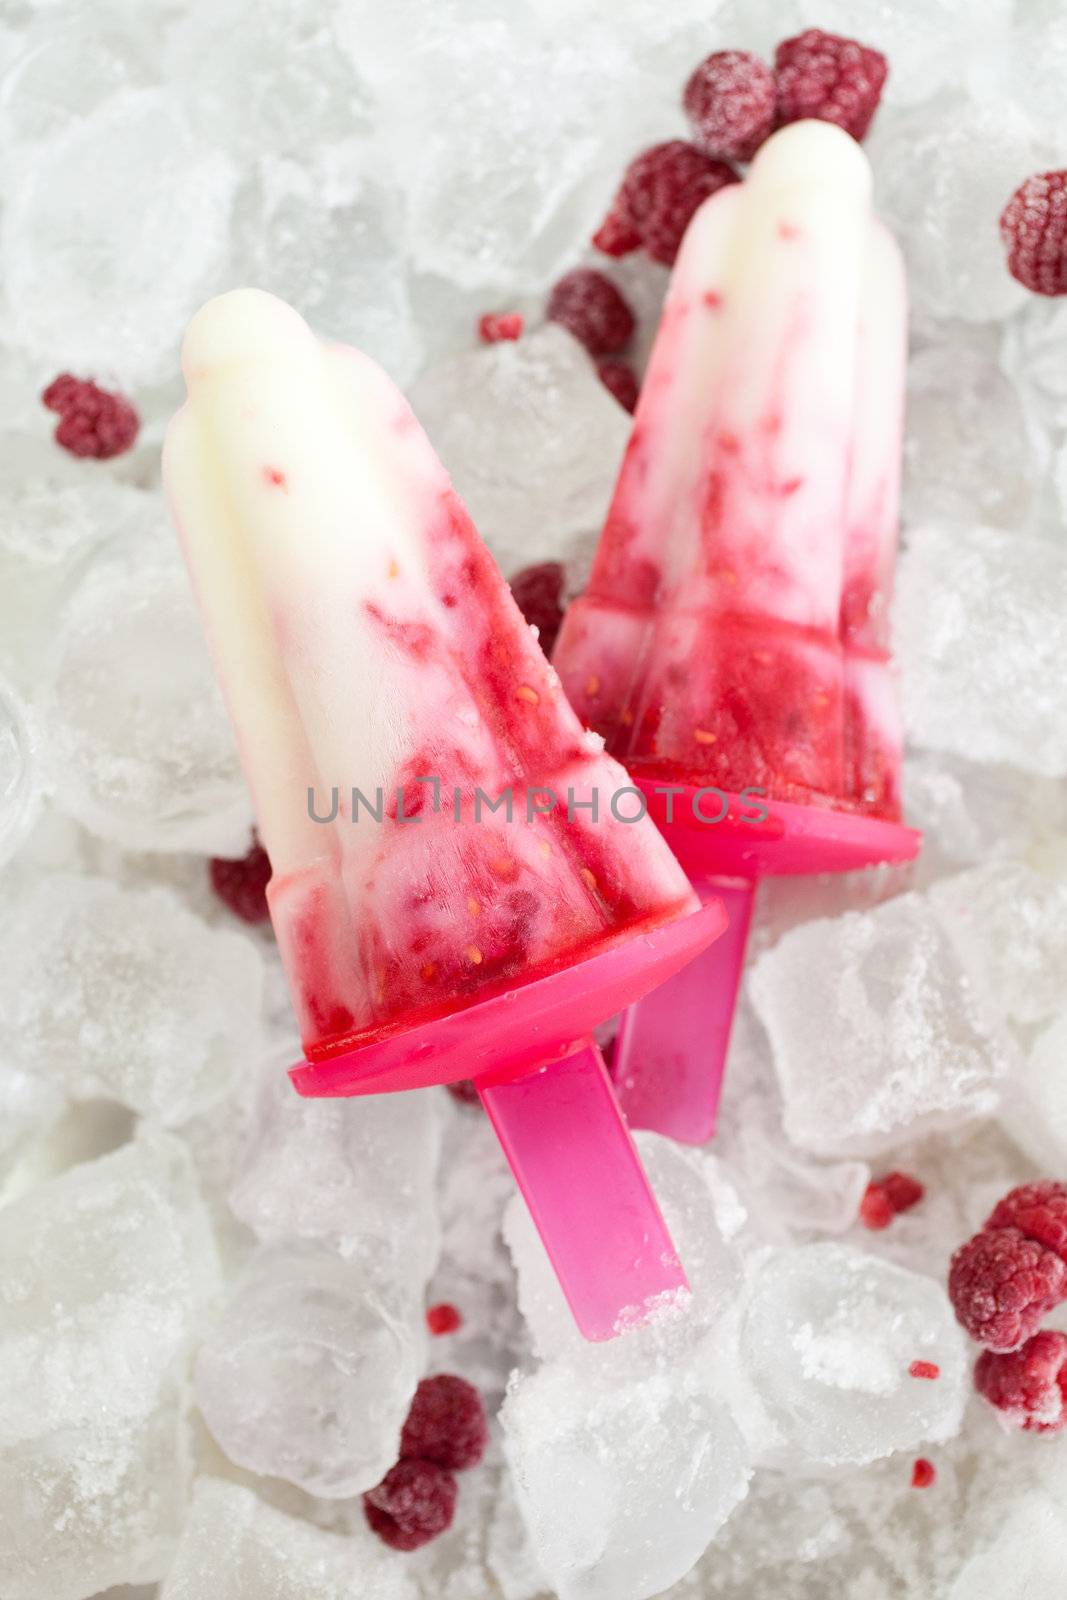 Raspberry icecream popsicles by Fotosmurf